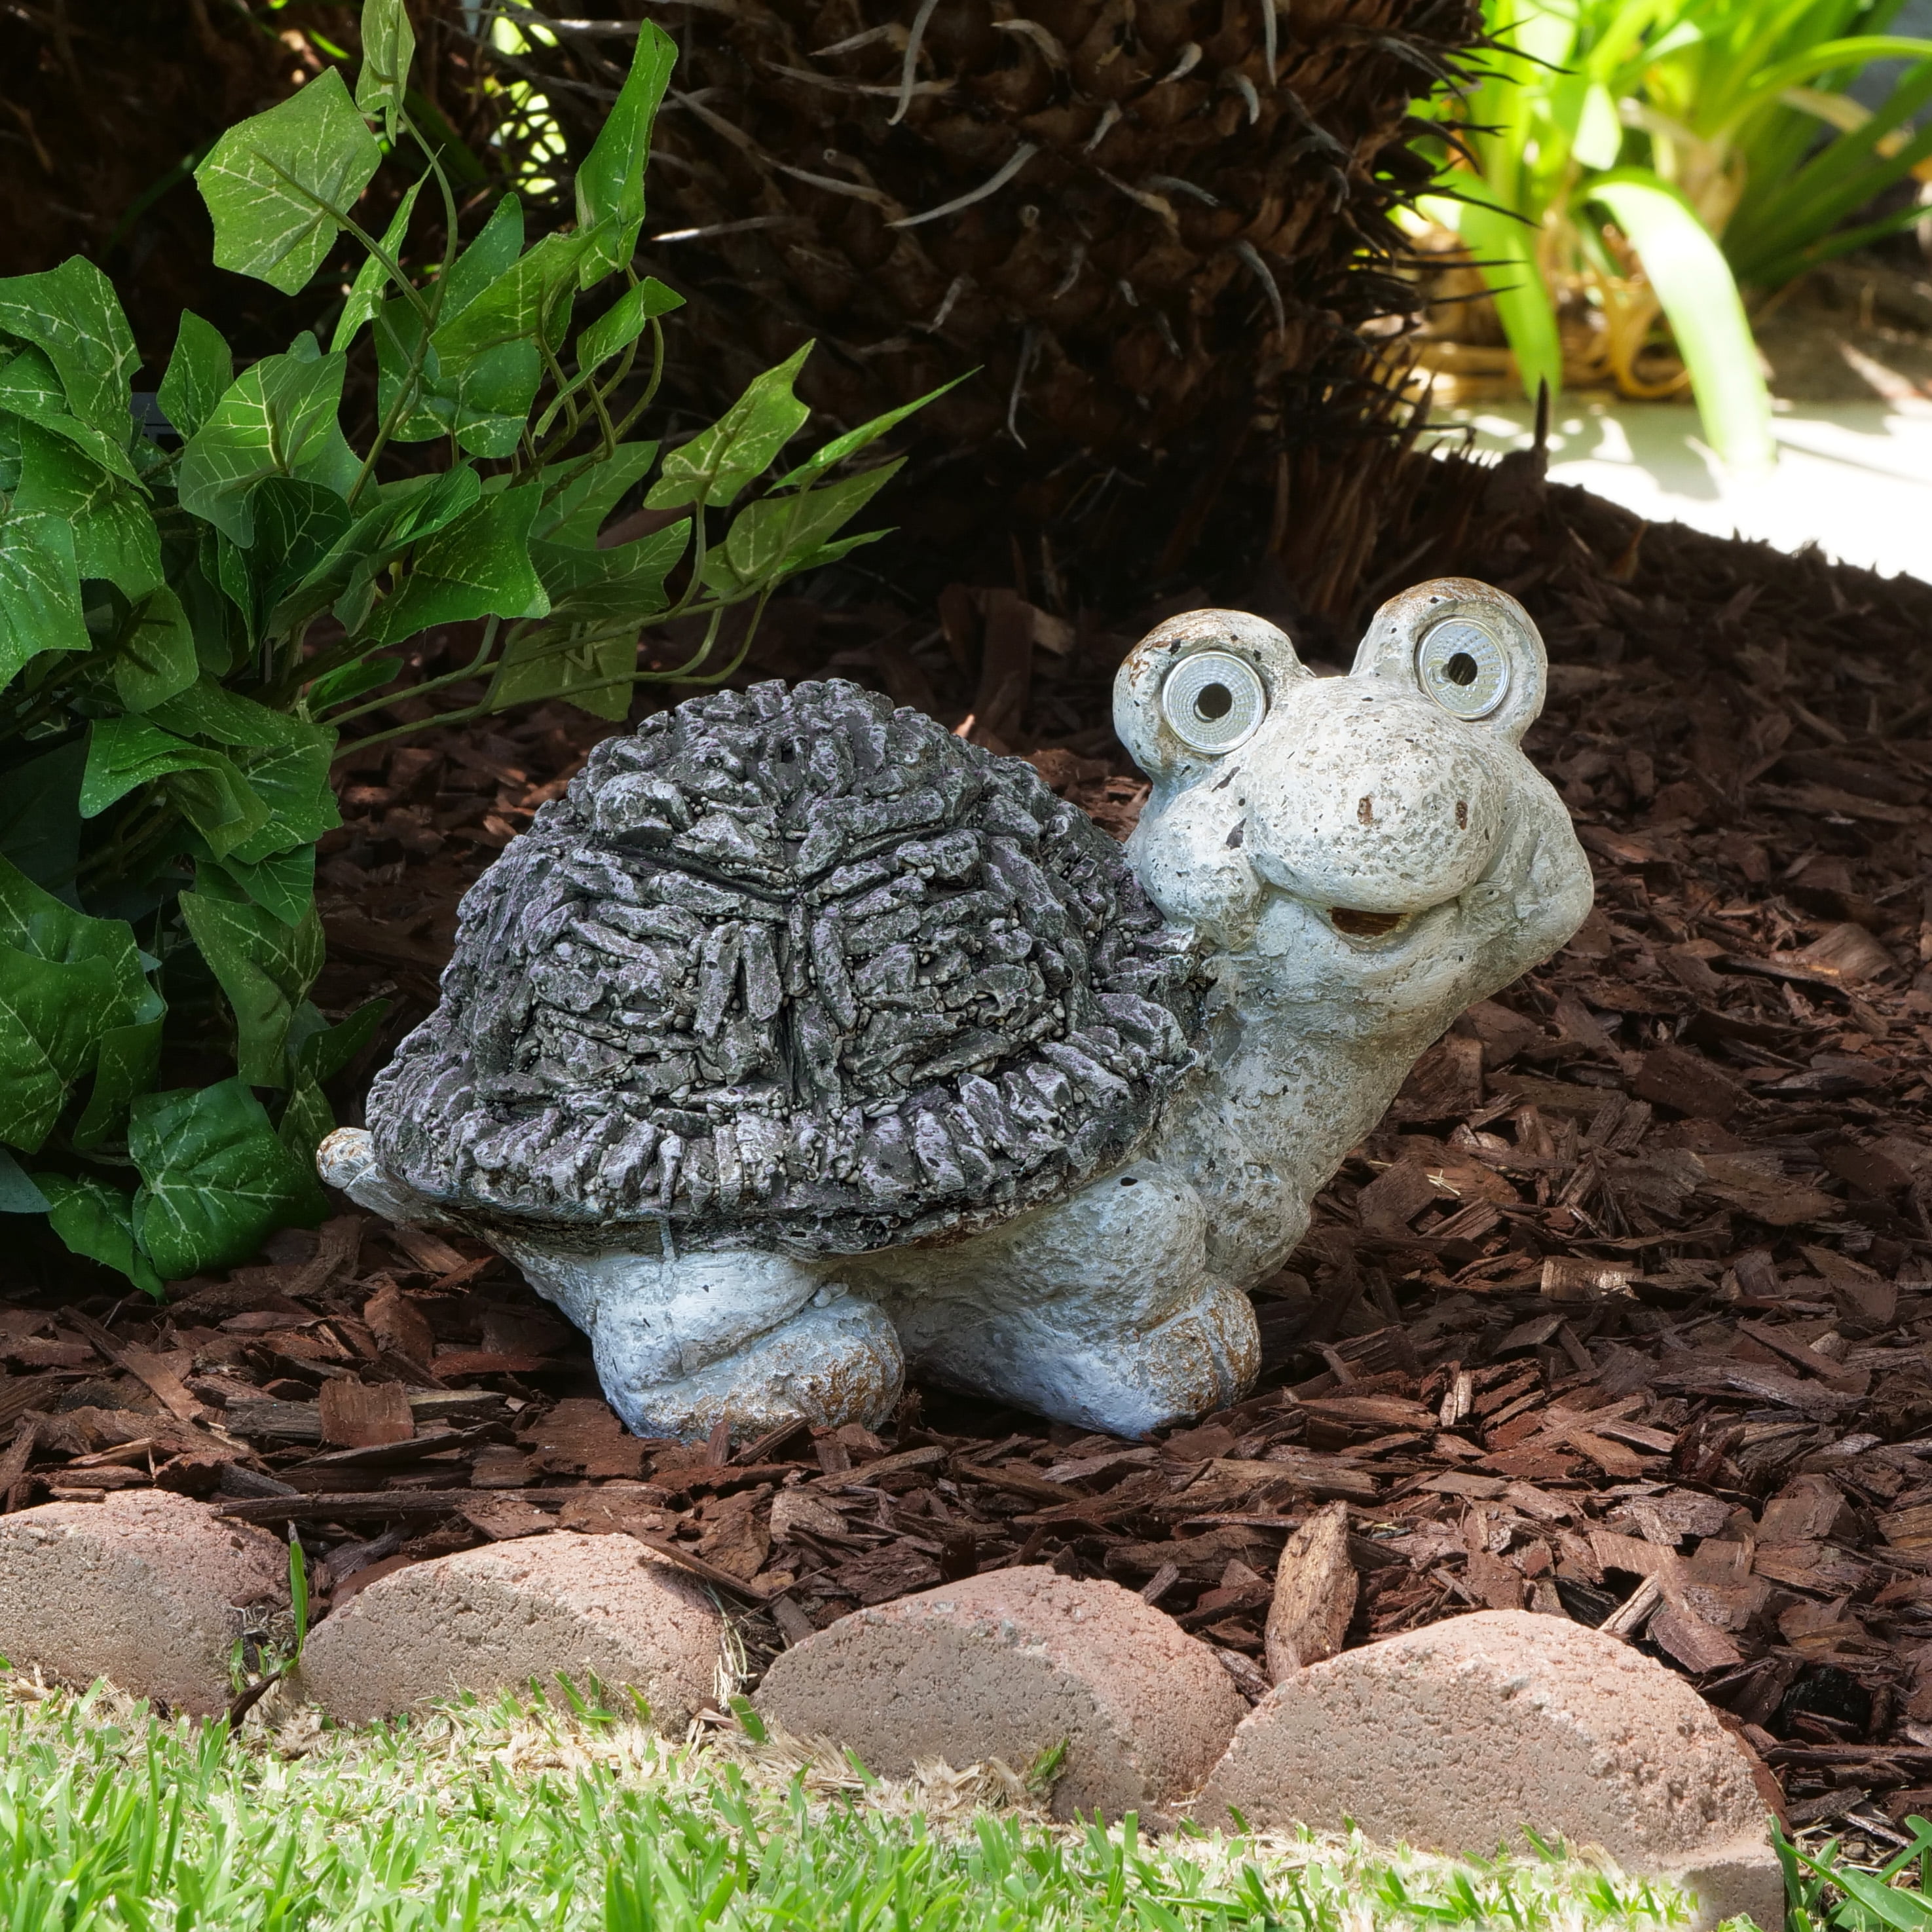 Solar Garden Statues Turtle Figurine Garden Decor Birthday Gifts for Mom  with 7